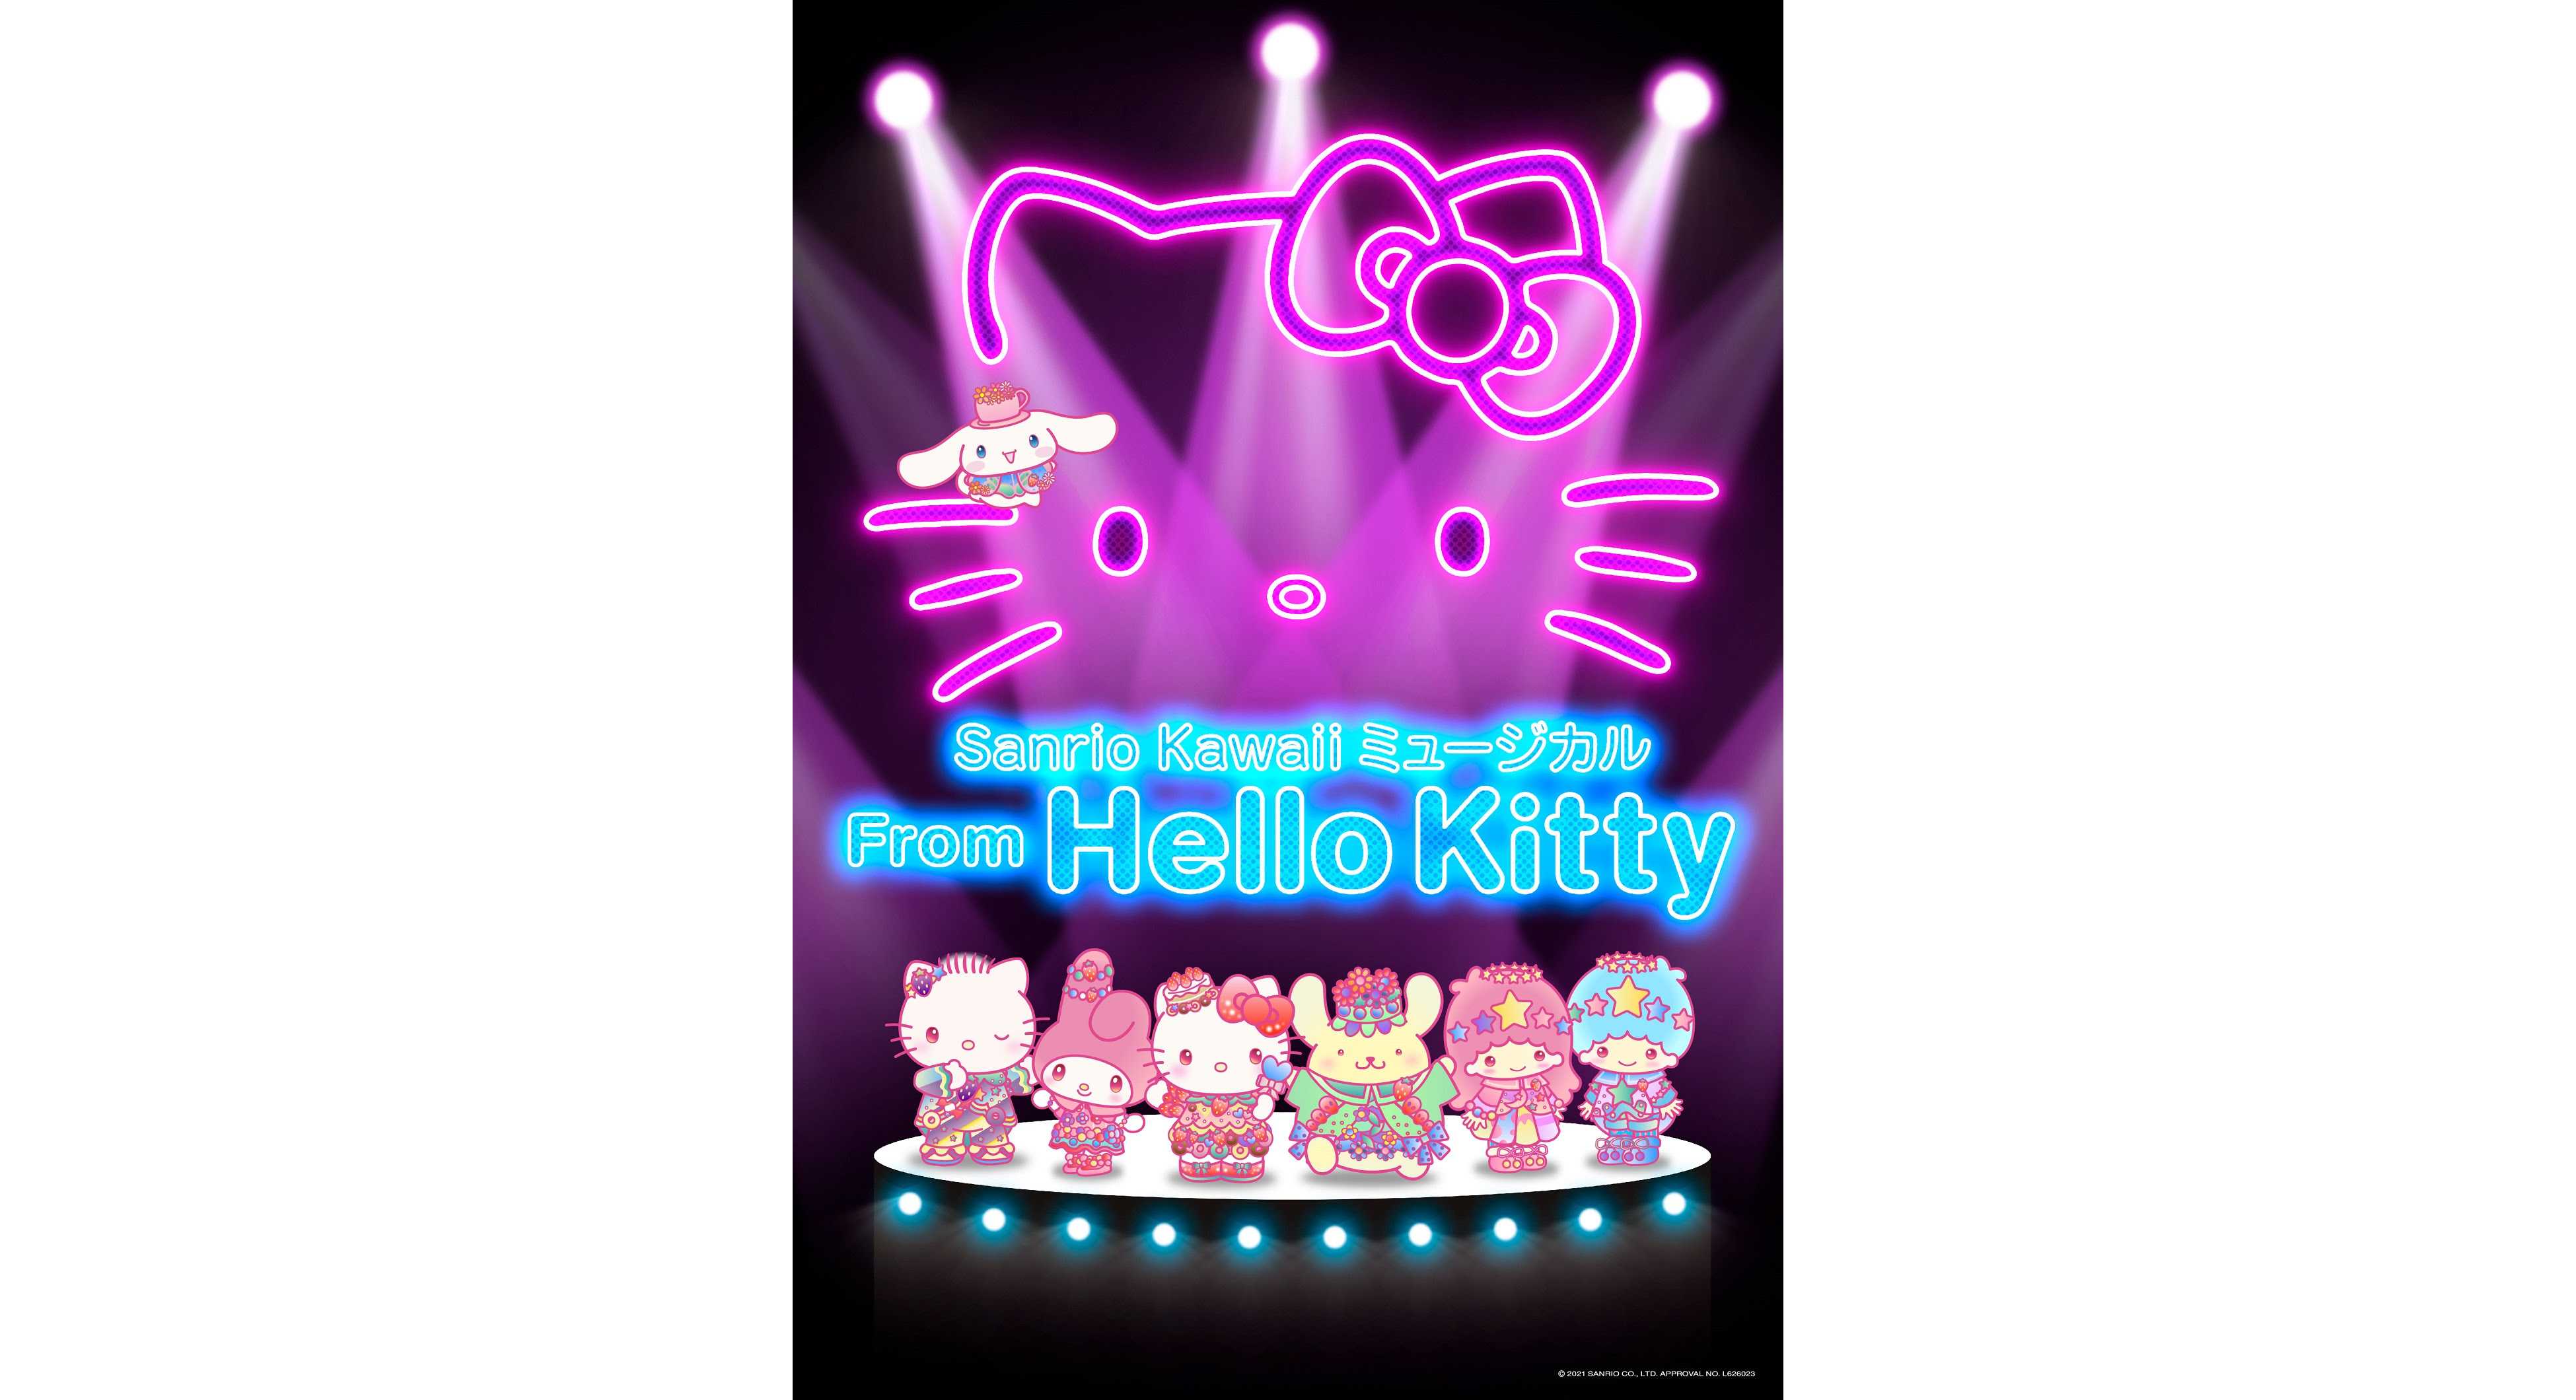 Sanrio Kawaii ミュージカル『From Hello Kitty』 5